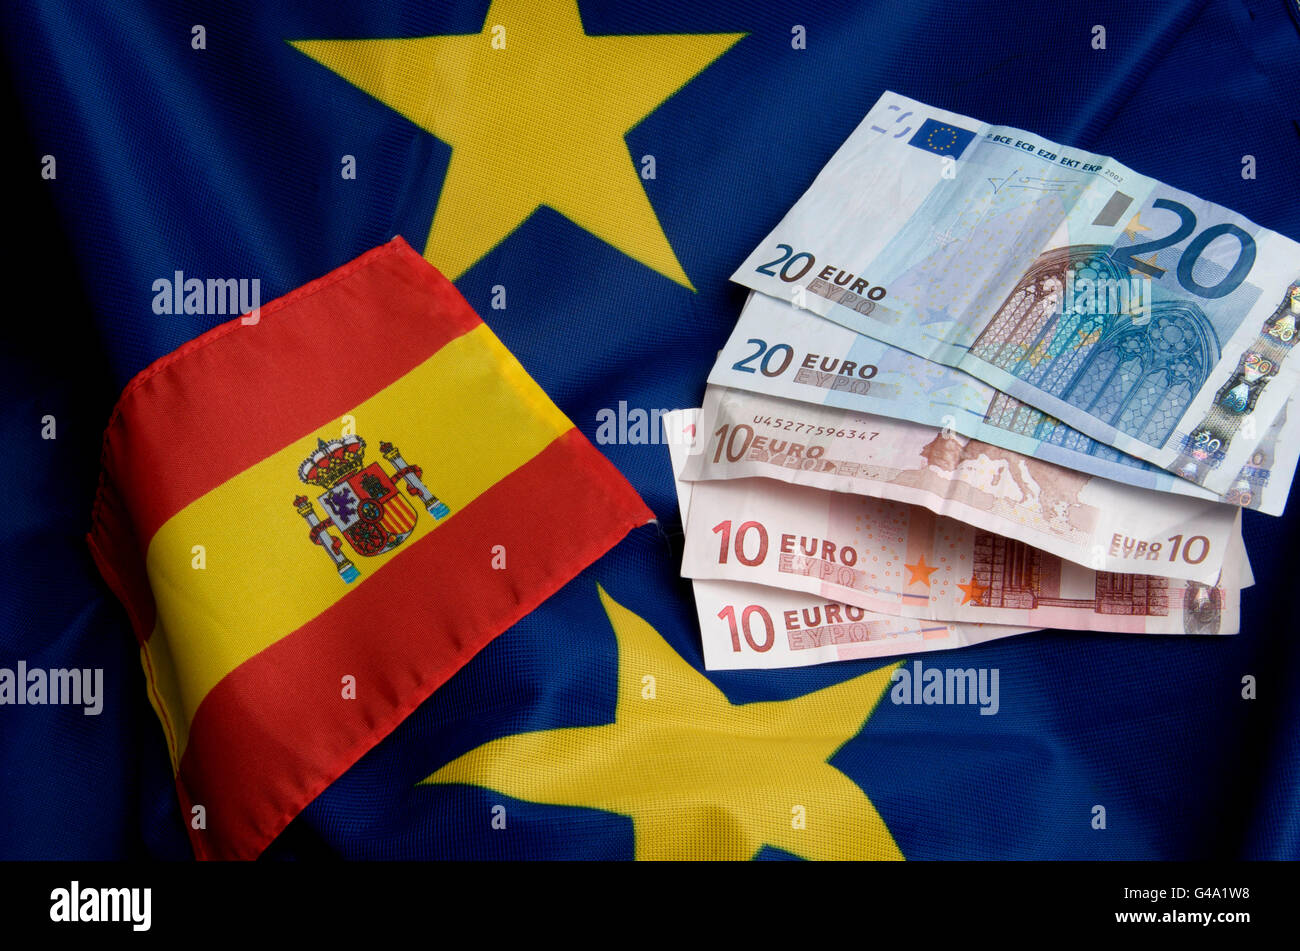 Spanish and EU flag and euro banknotes, illustration Stock Photo